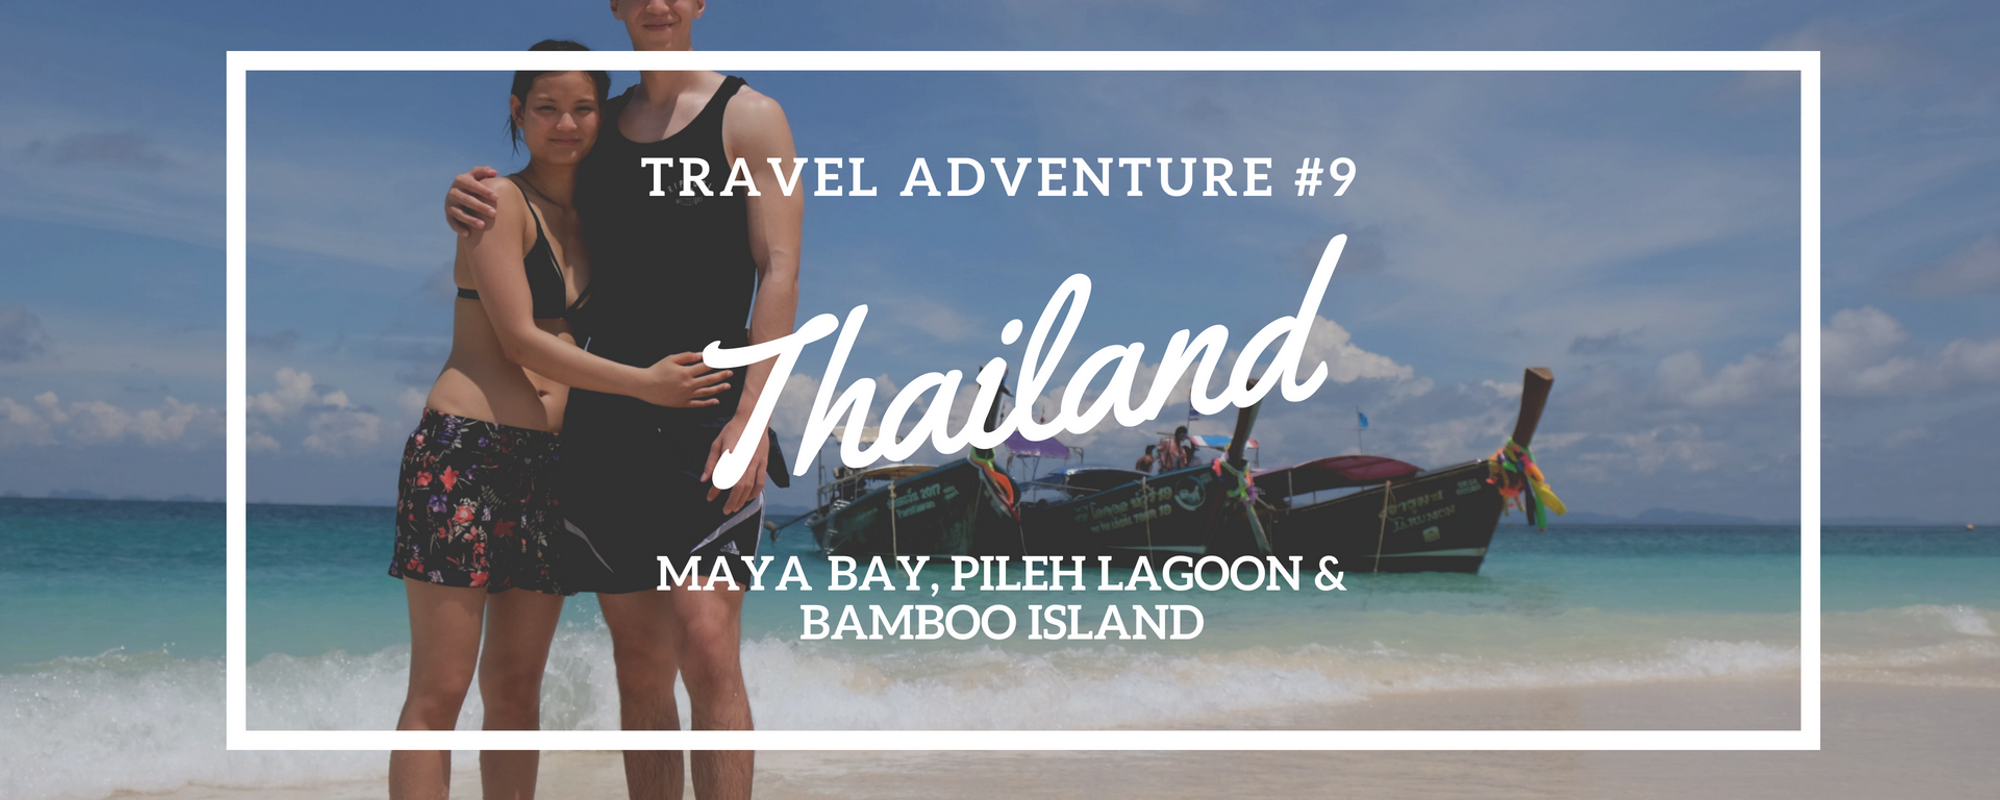 Travel Adventure #9 | Thailand | Phi Phi Islands Trip to Maya Bay, Pileh Lagoon & Bamboo Island | Sunshine, Snorkelling & Swimming!